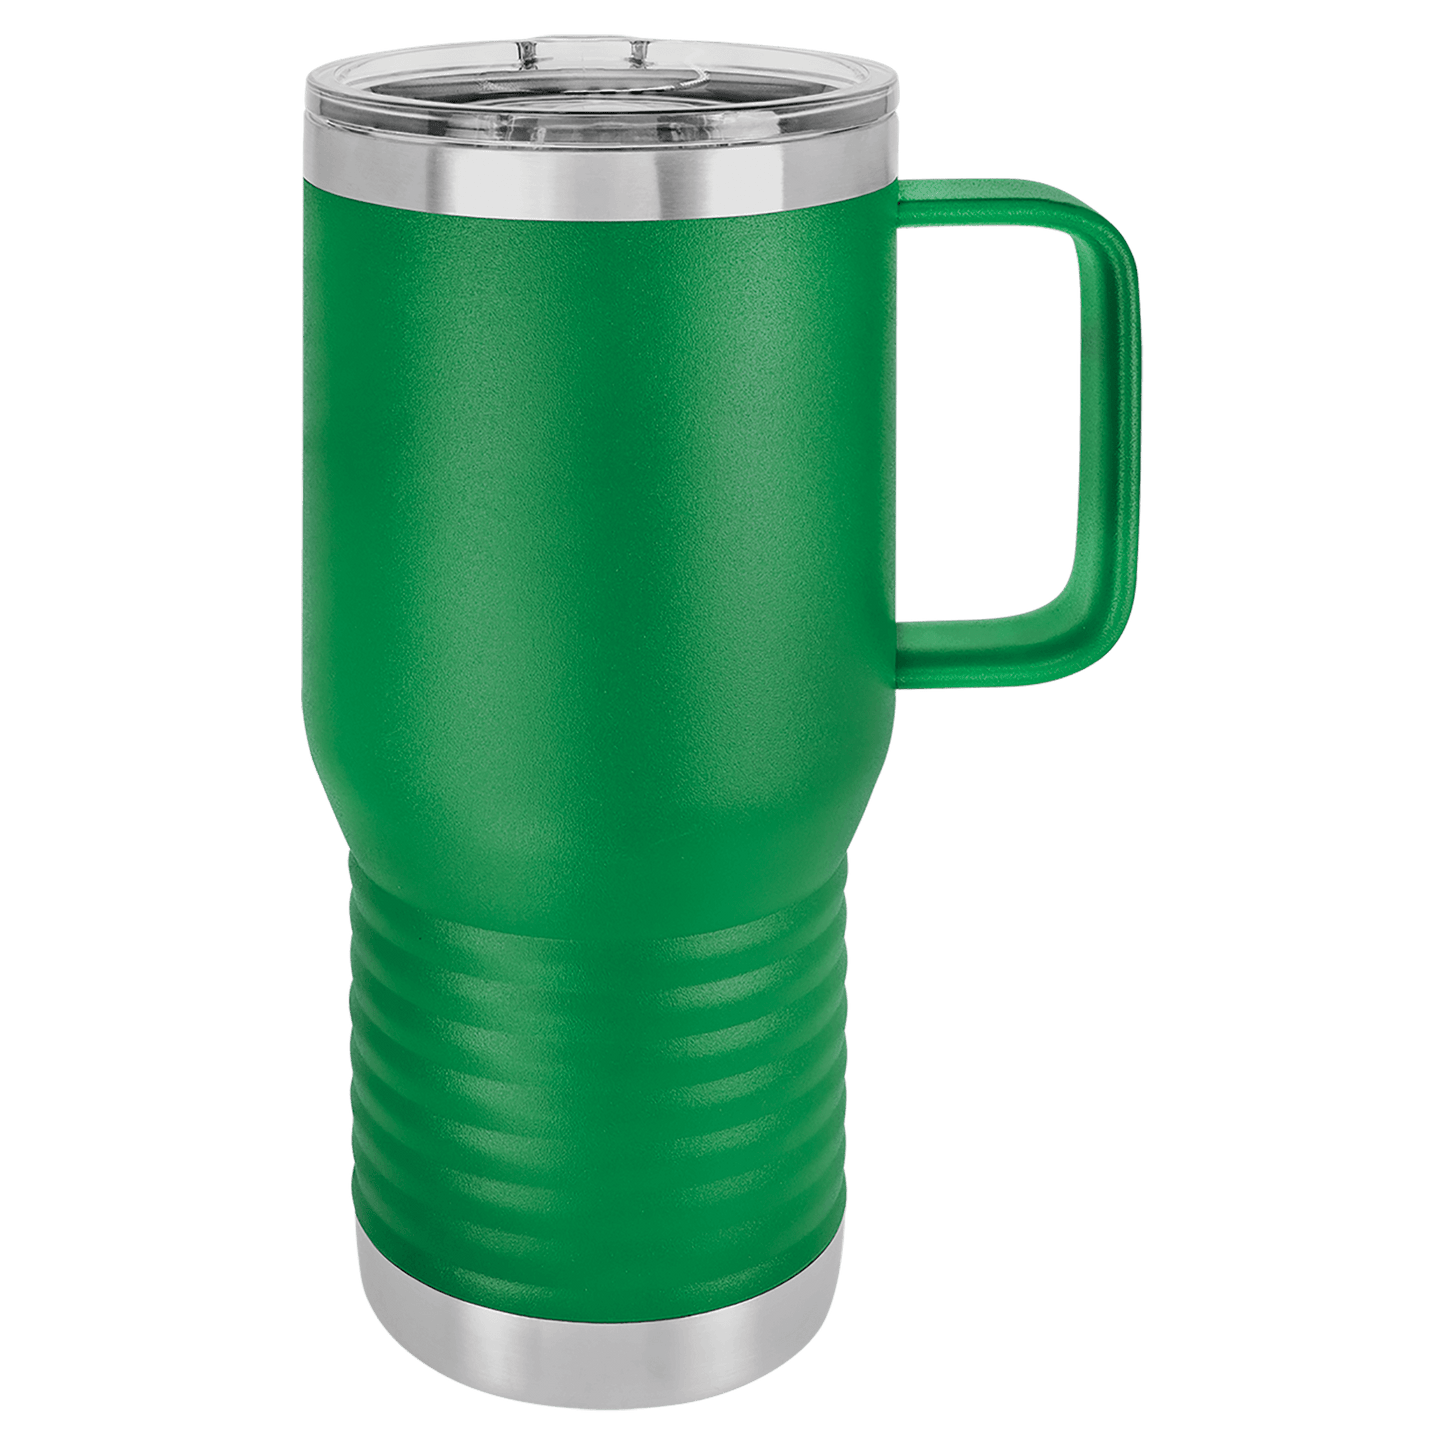 24oz Coffee Travel Mug With Sliding Lid - Powder Coated Forest Green